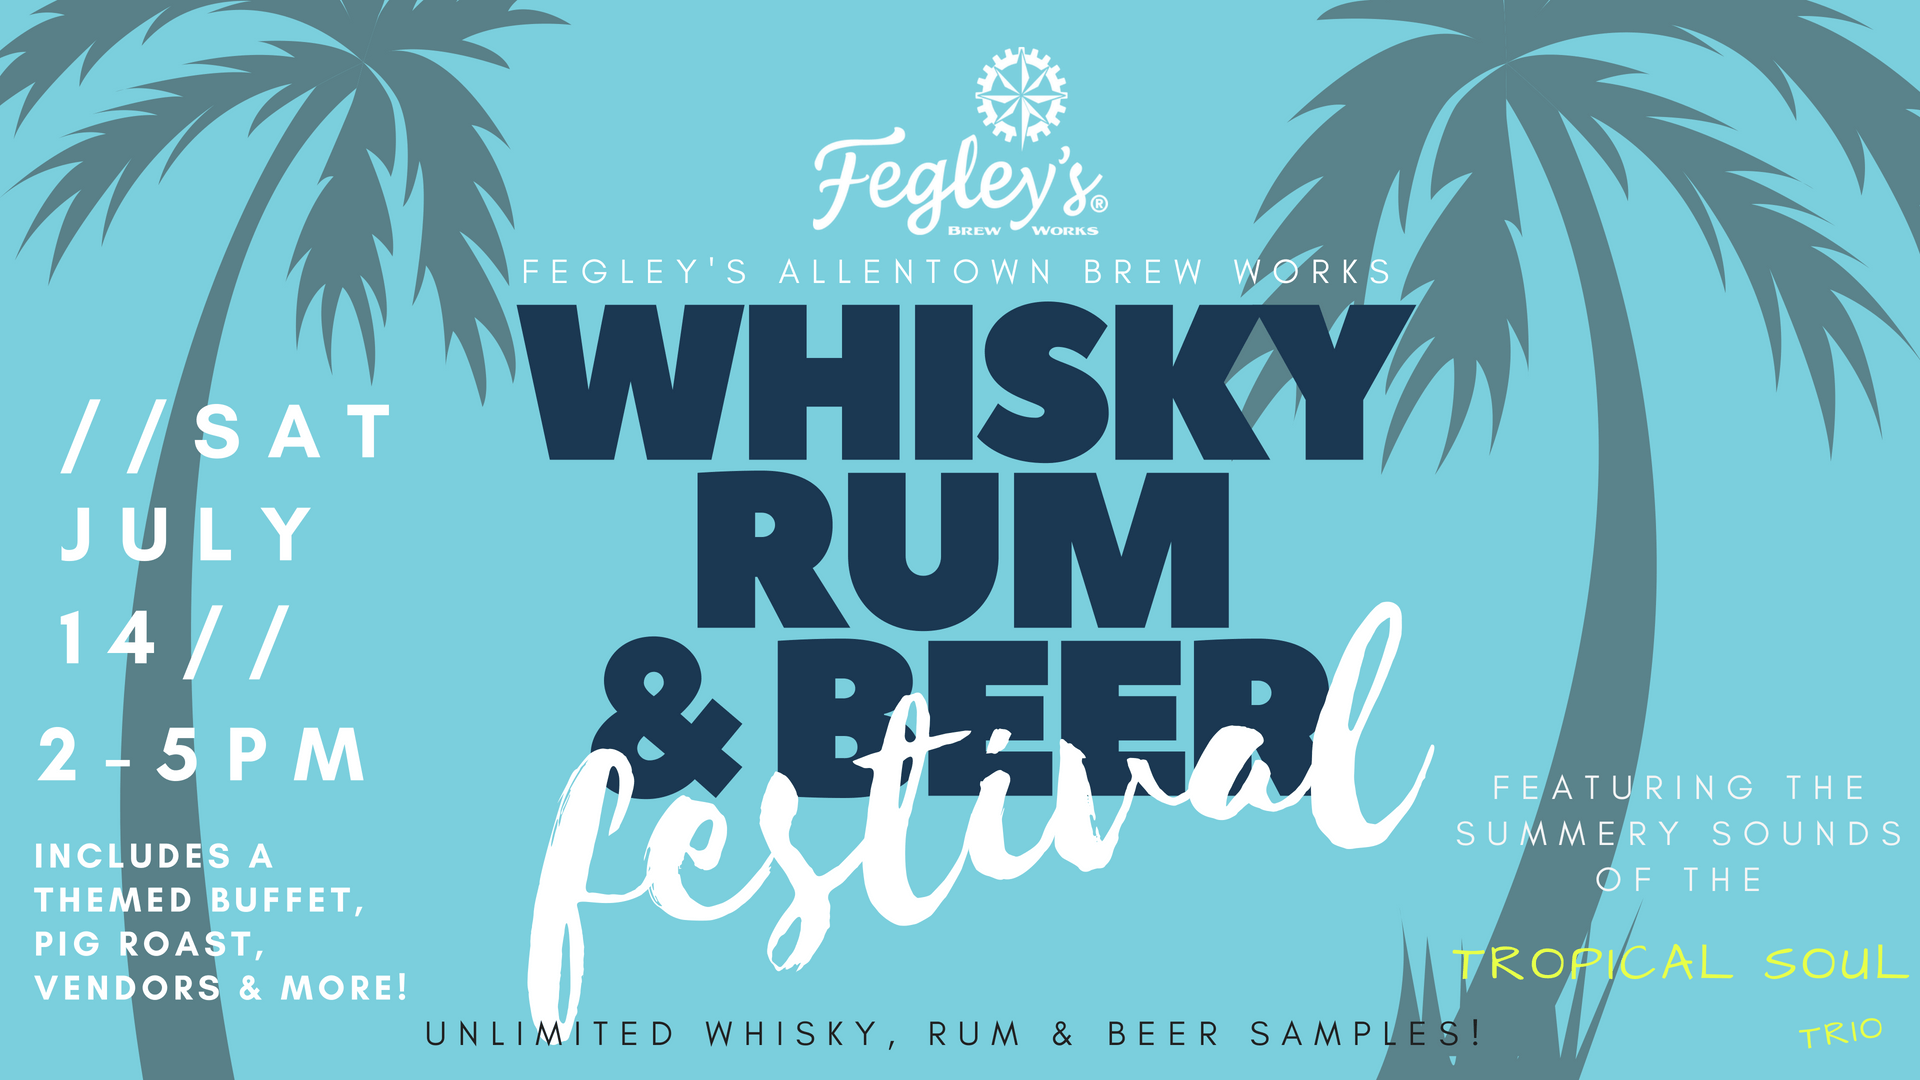 Fegley's Whisky, Rum & Beer Festival 2018 @ Fegley's Allentown Brew Works | Allentown | Pennsylvania | United States